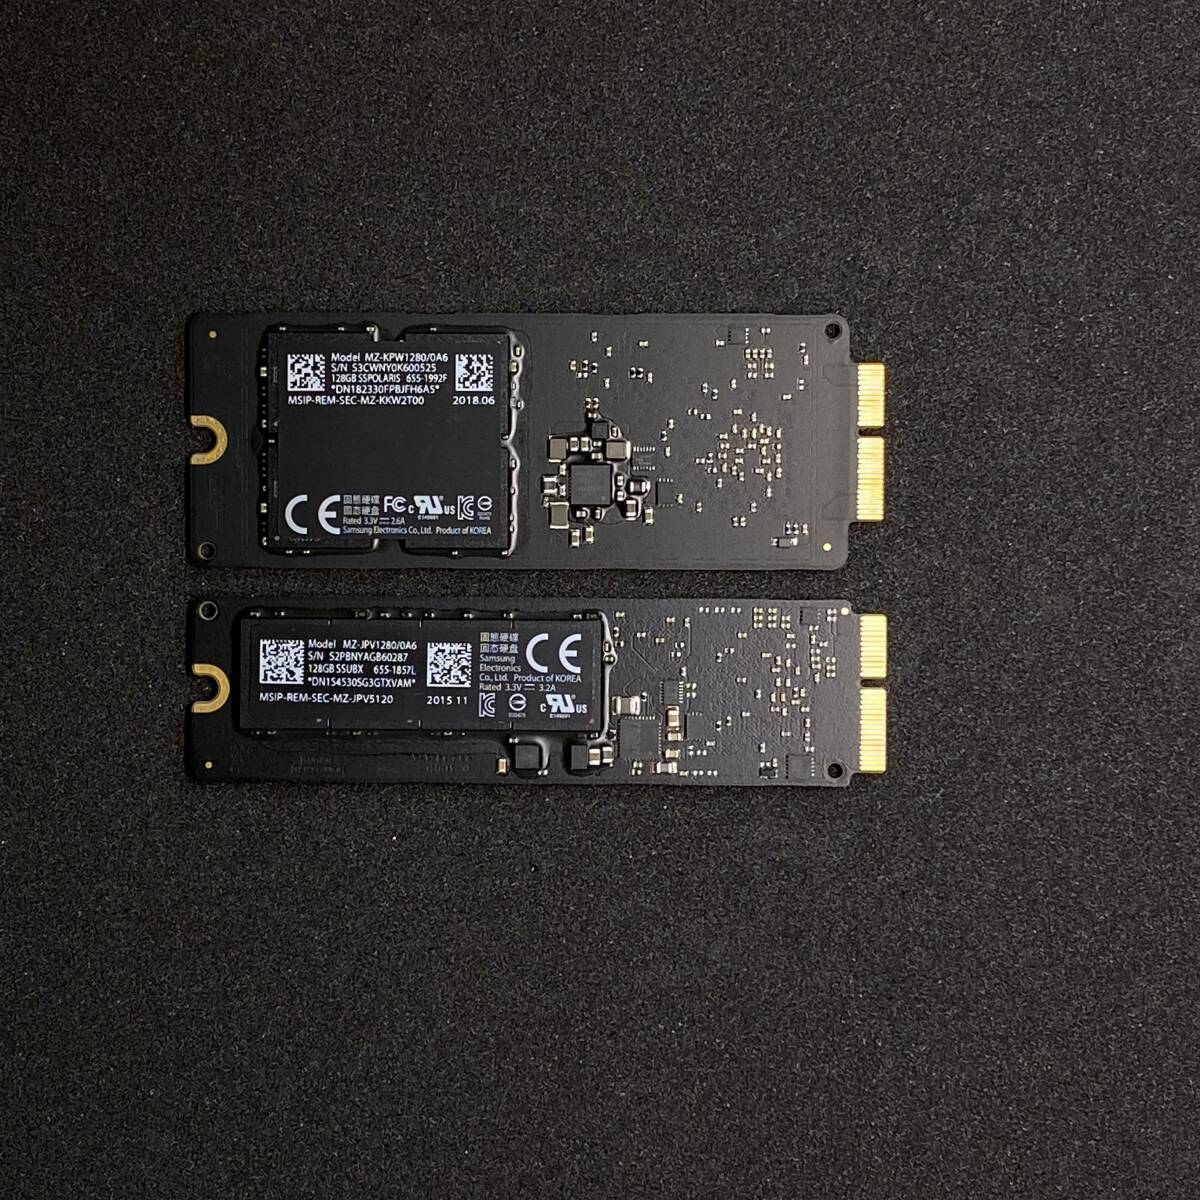 3[. bargain 2 pieces set ] operation verification settled Apple original SSD 128GB SAMSUNG